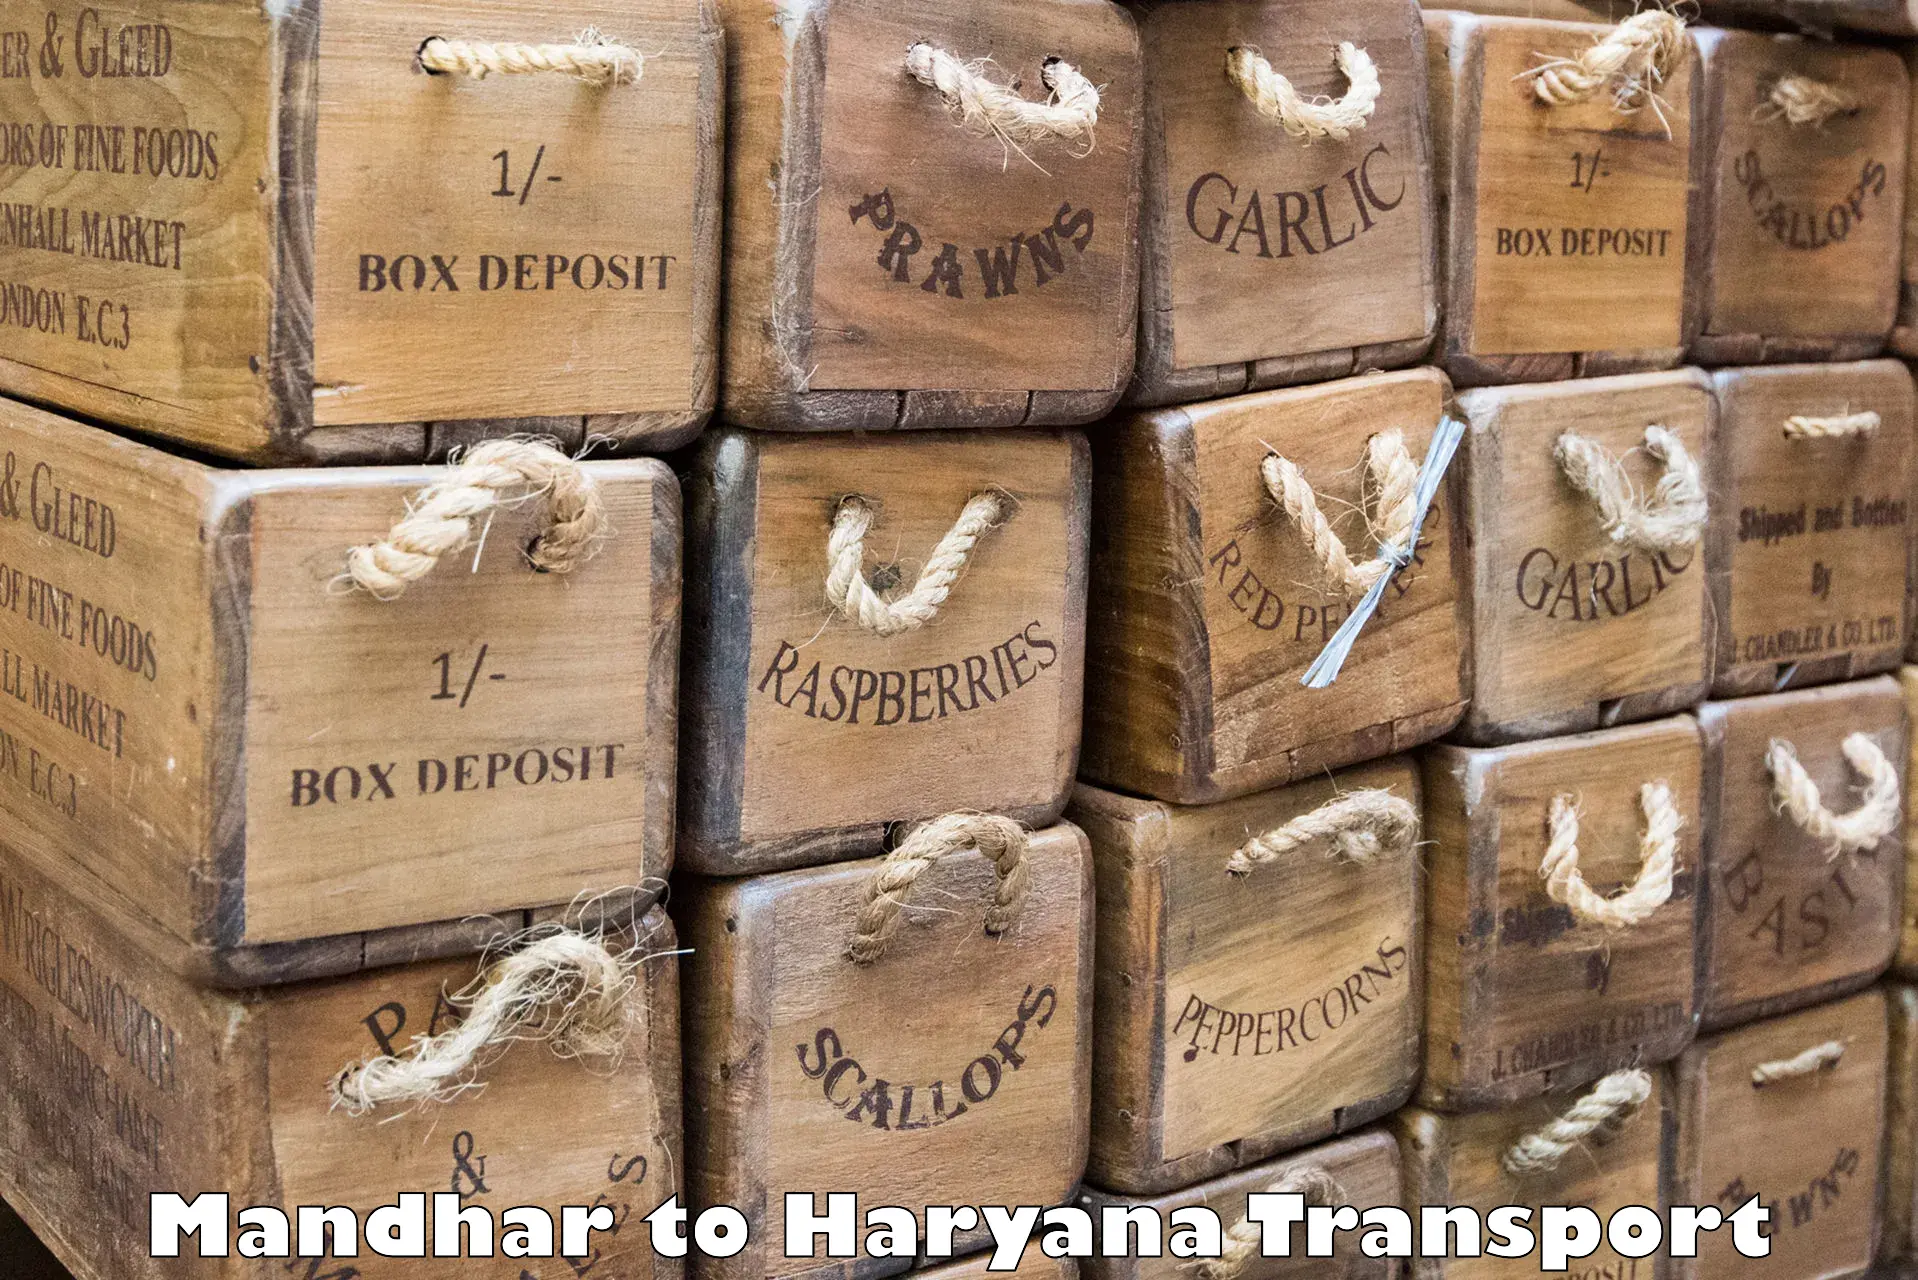 Truck transport companies in India Mandhar to Hansi